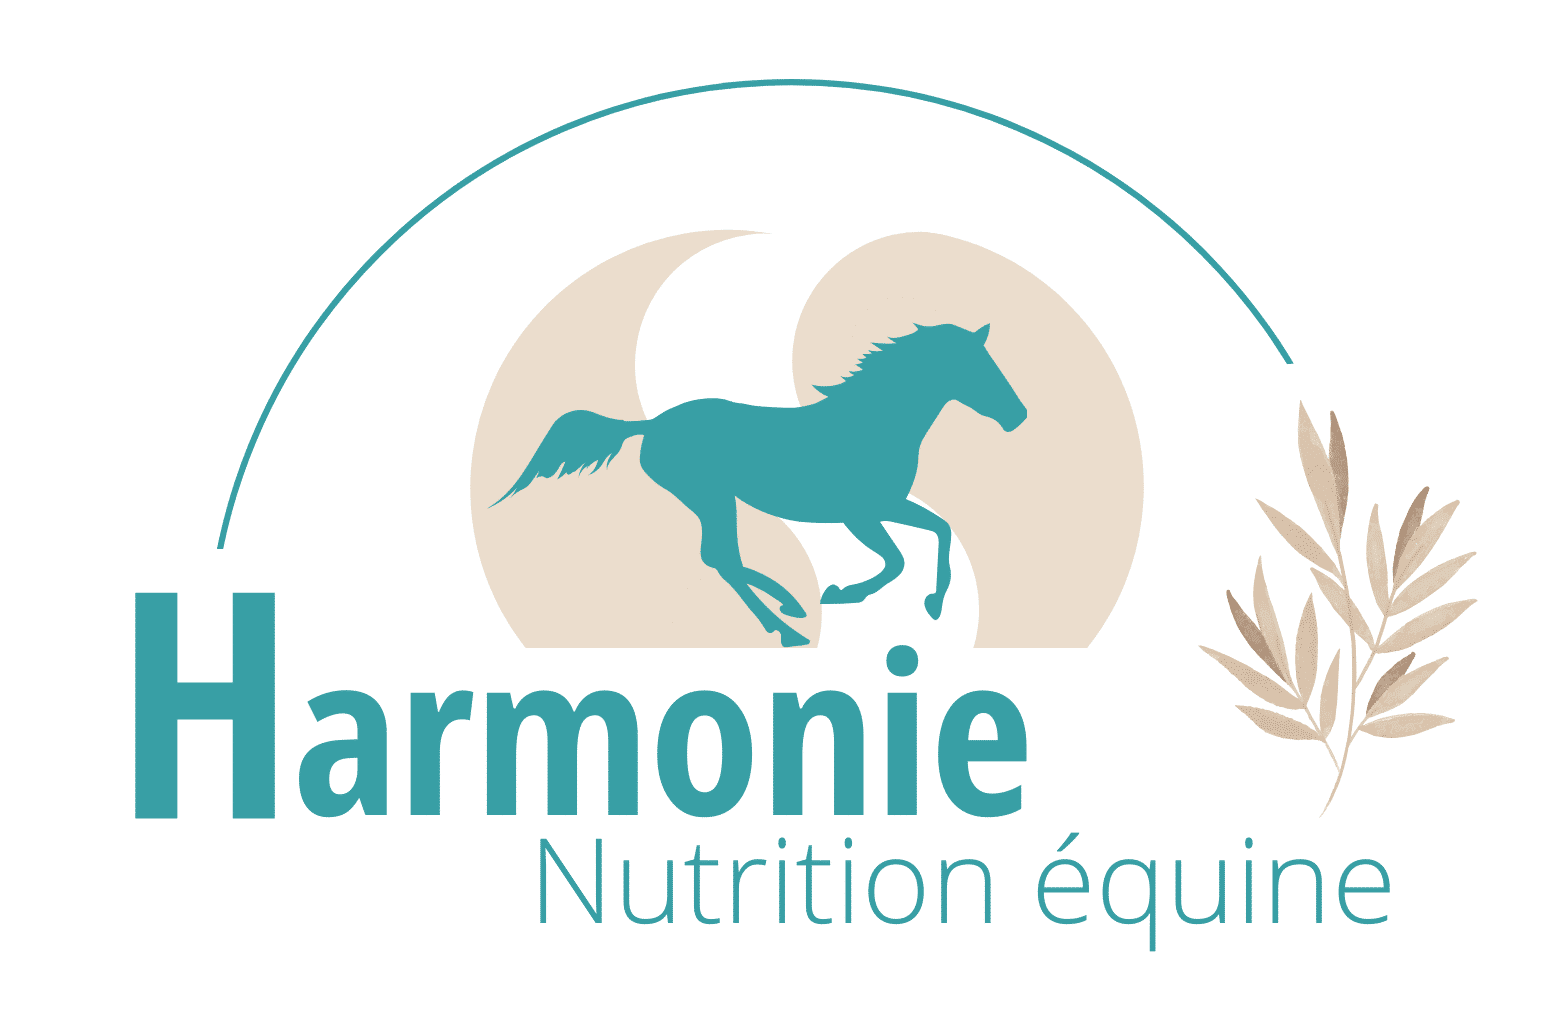 Harmonie Nutrition Equine